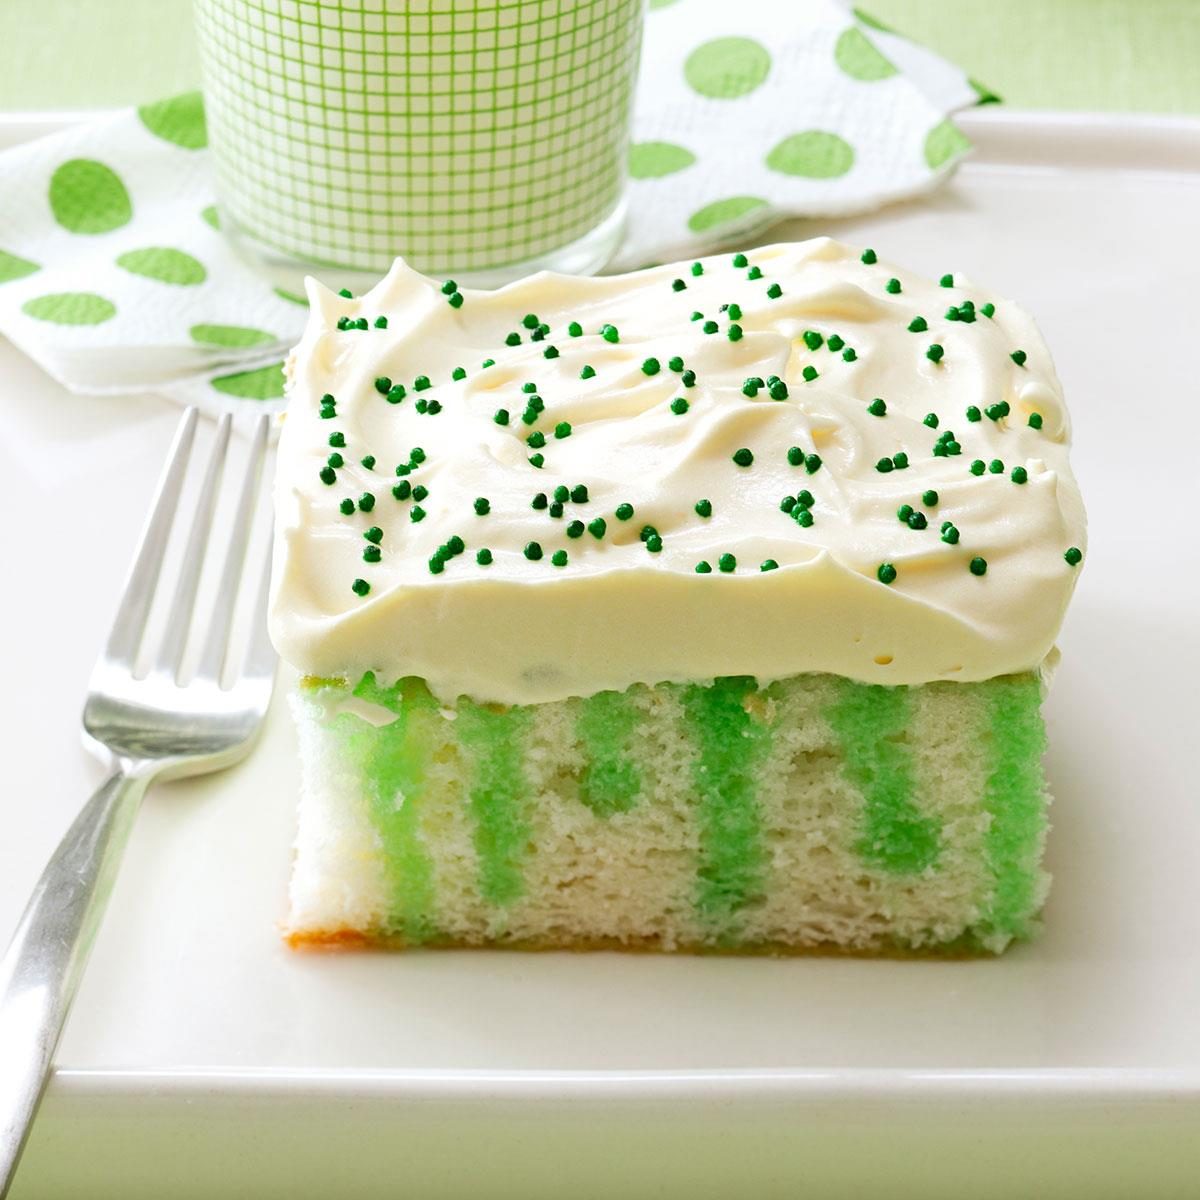 March Birthday: Wearing O' Green Cake